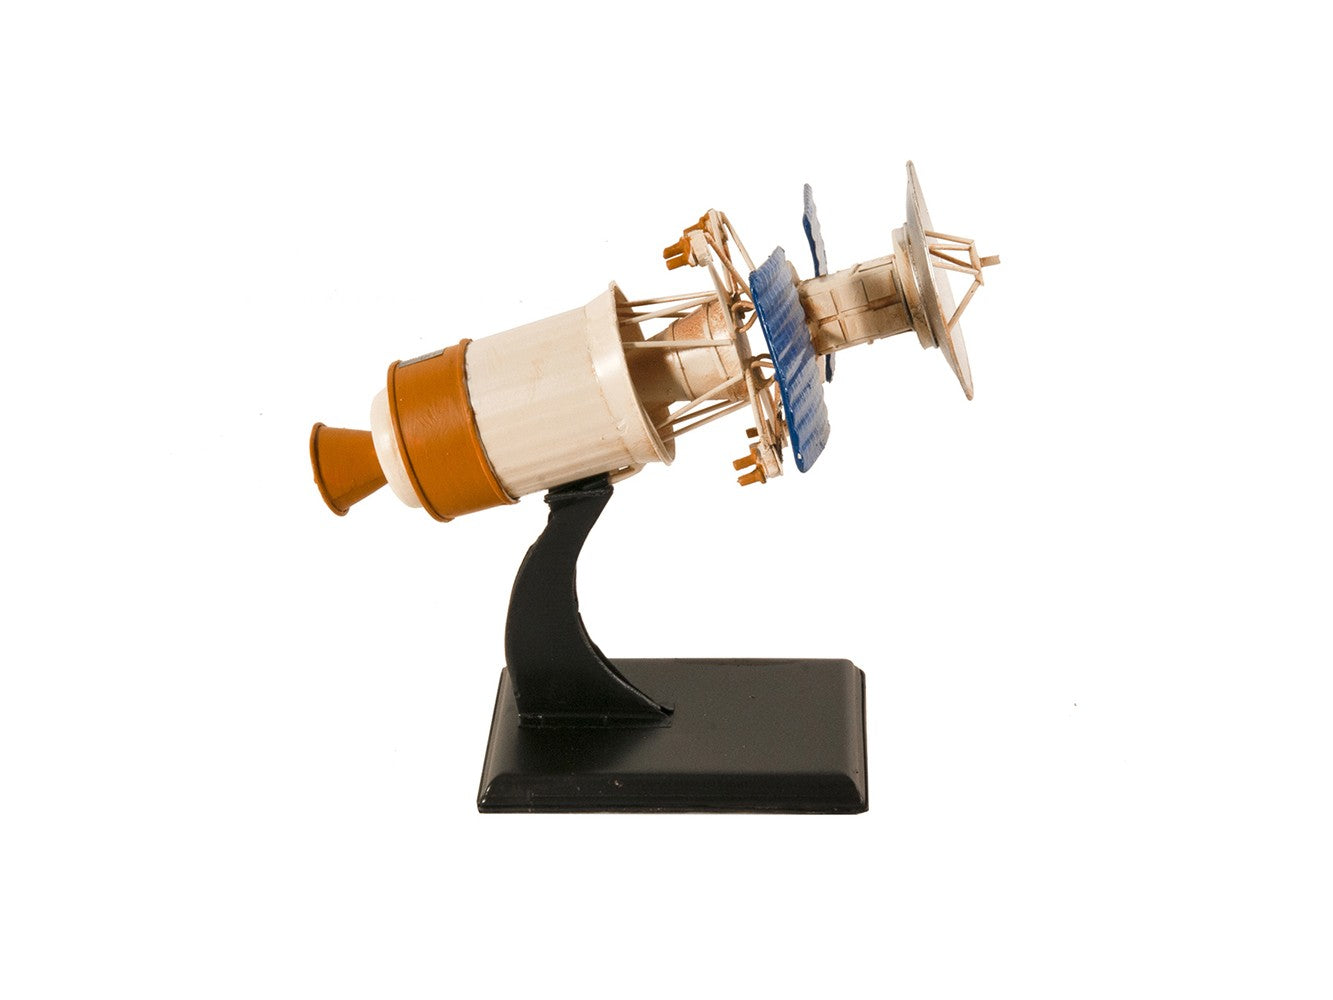 c1989 Magellan Spacecraft Sculpture